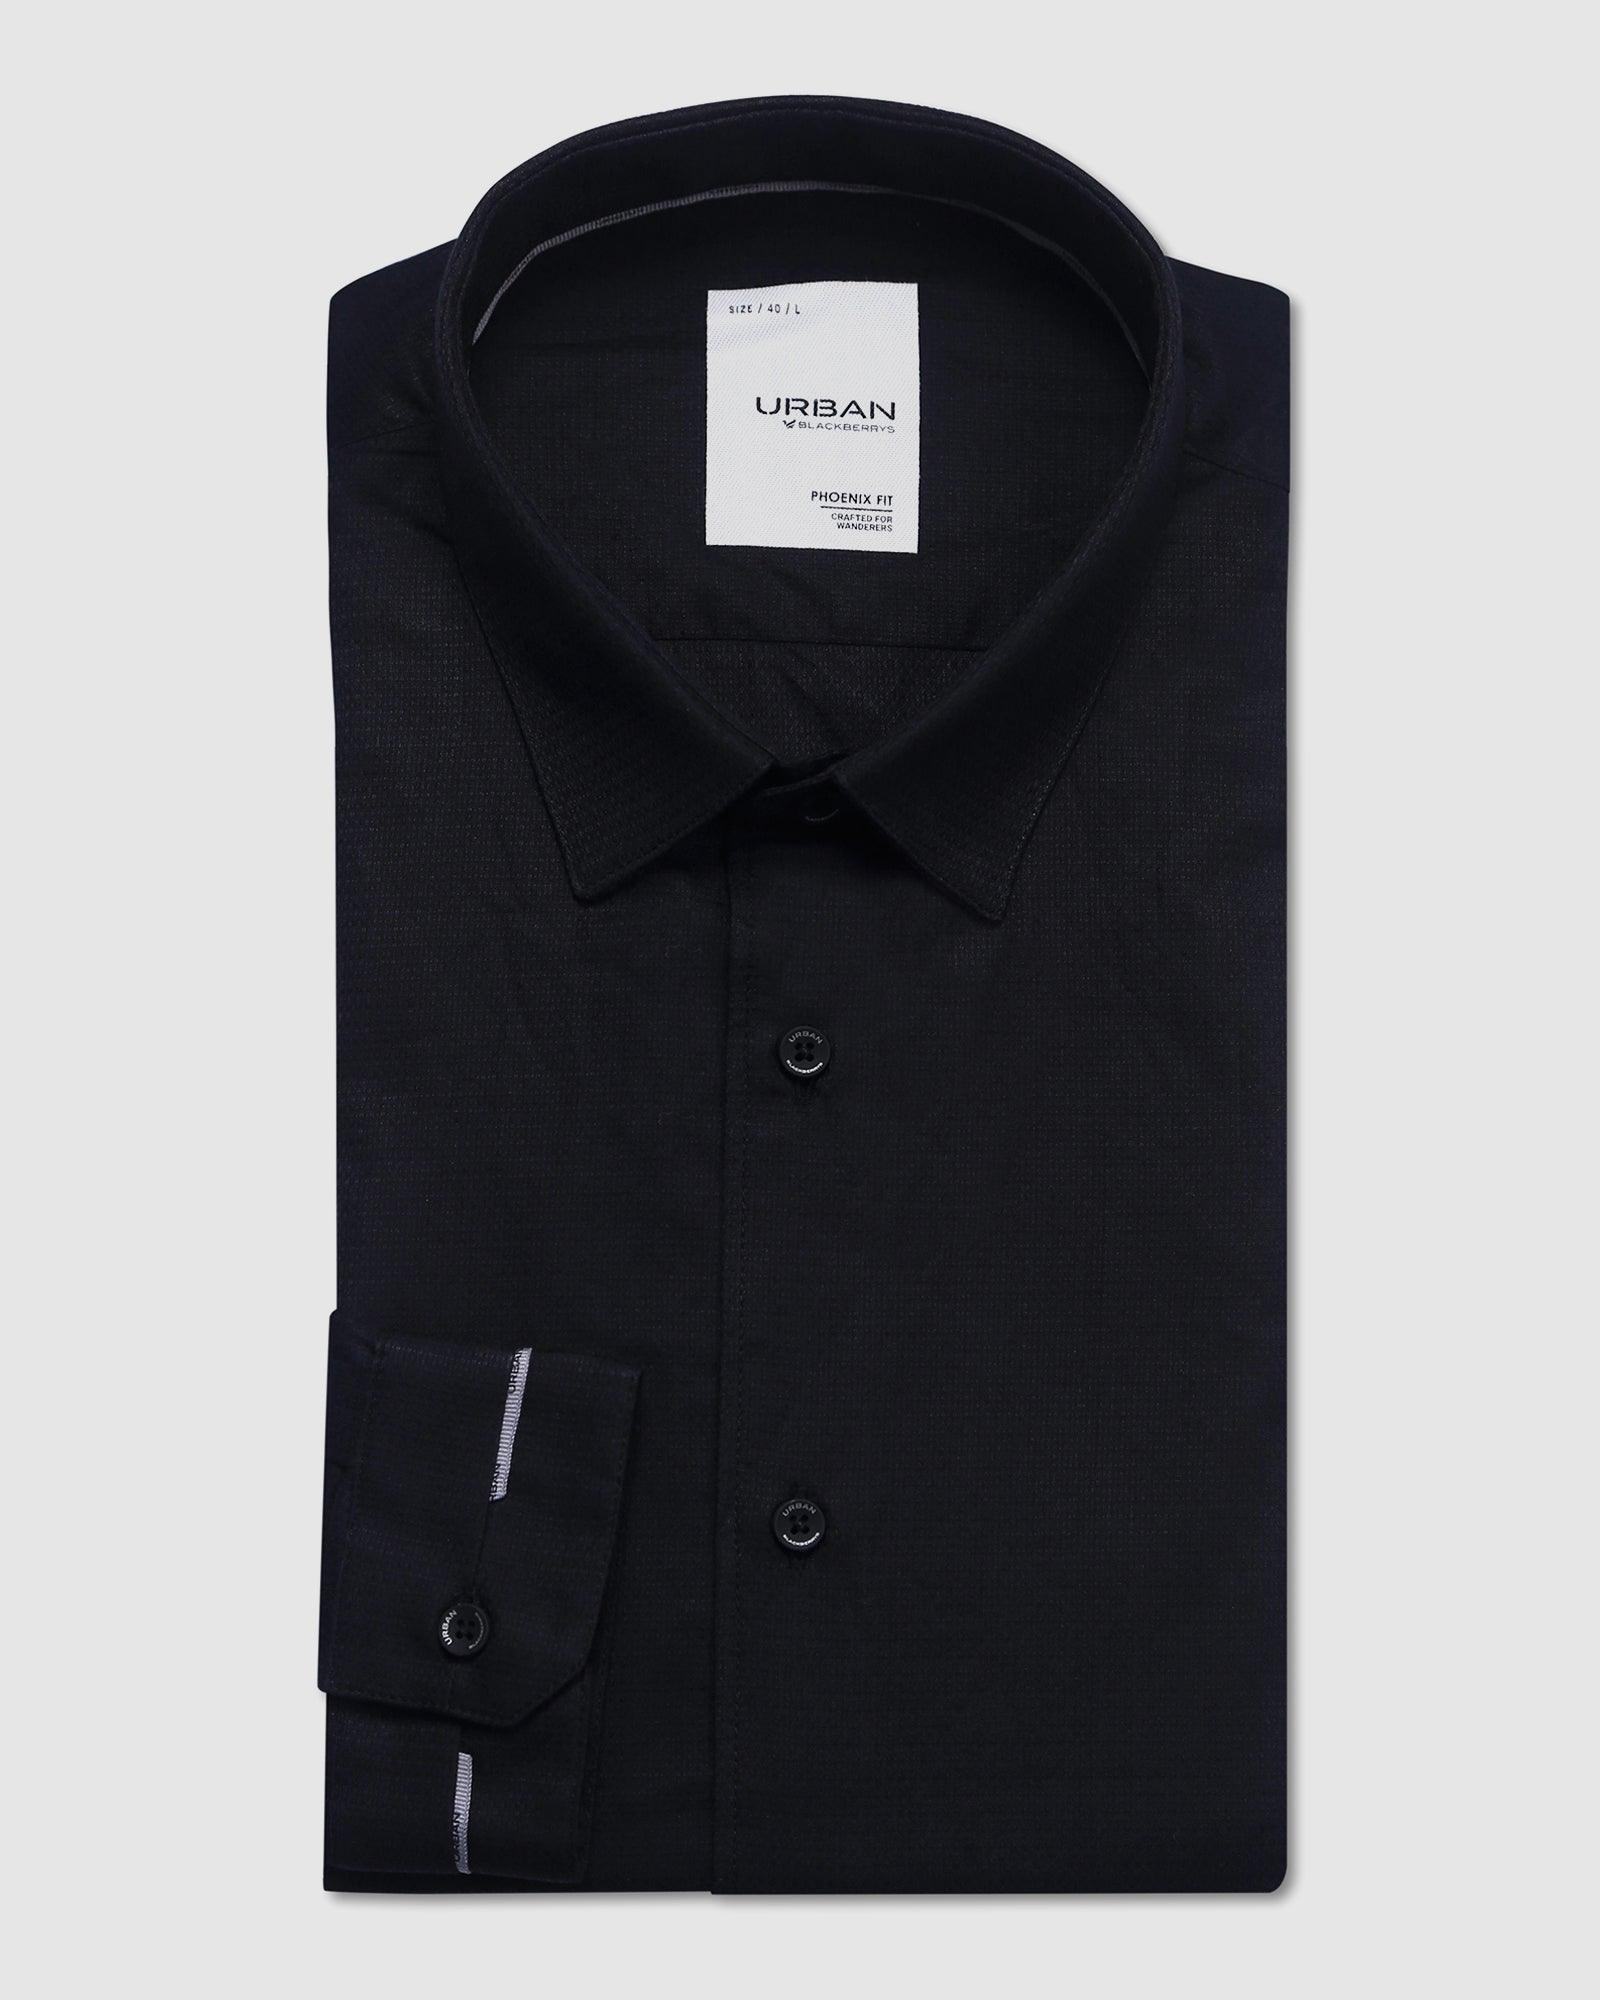 Casual Black Textured Shirt - Jameson